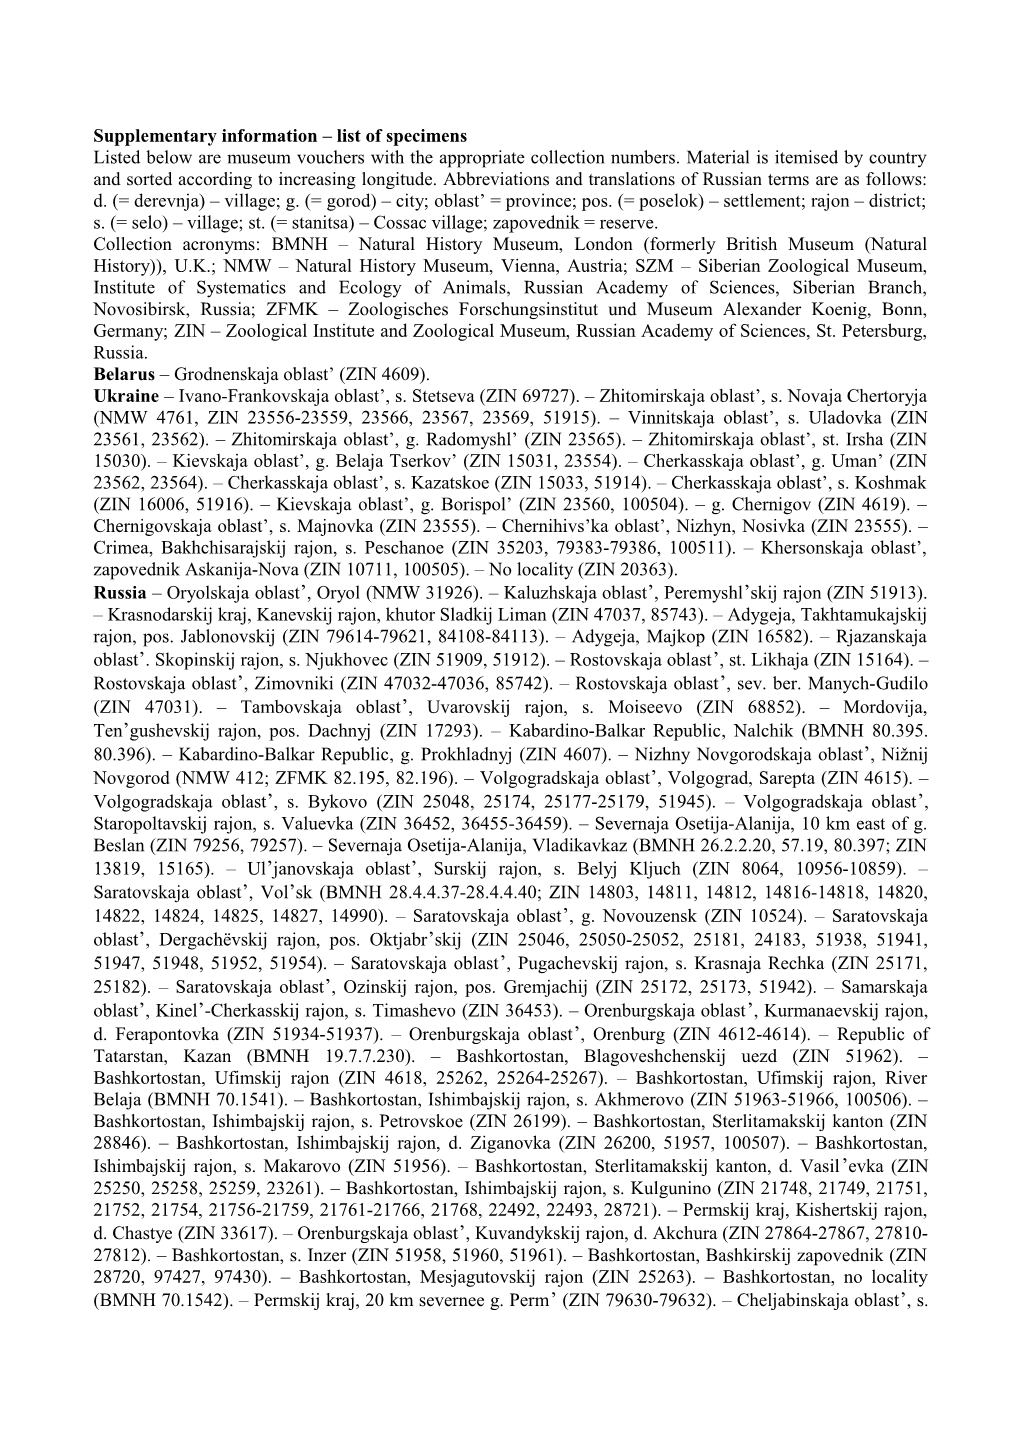 Supplementary Information List of Specimens